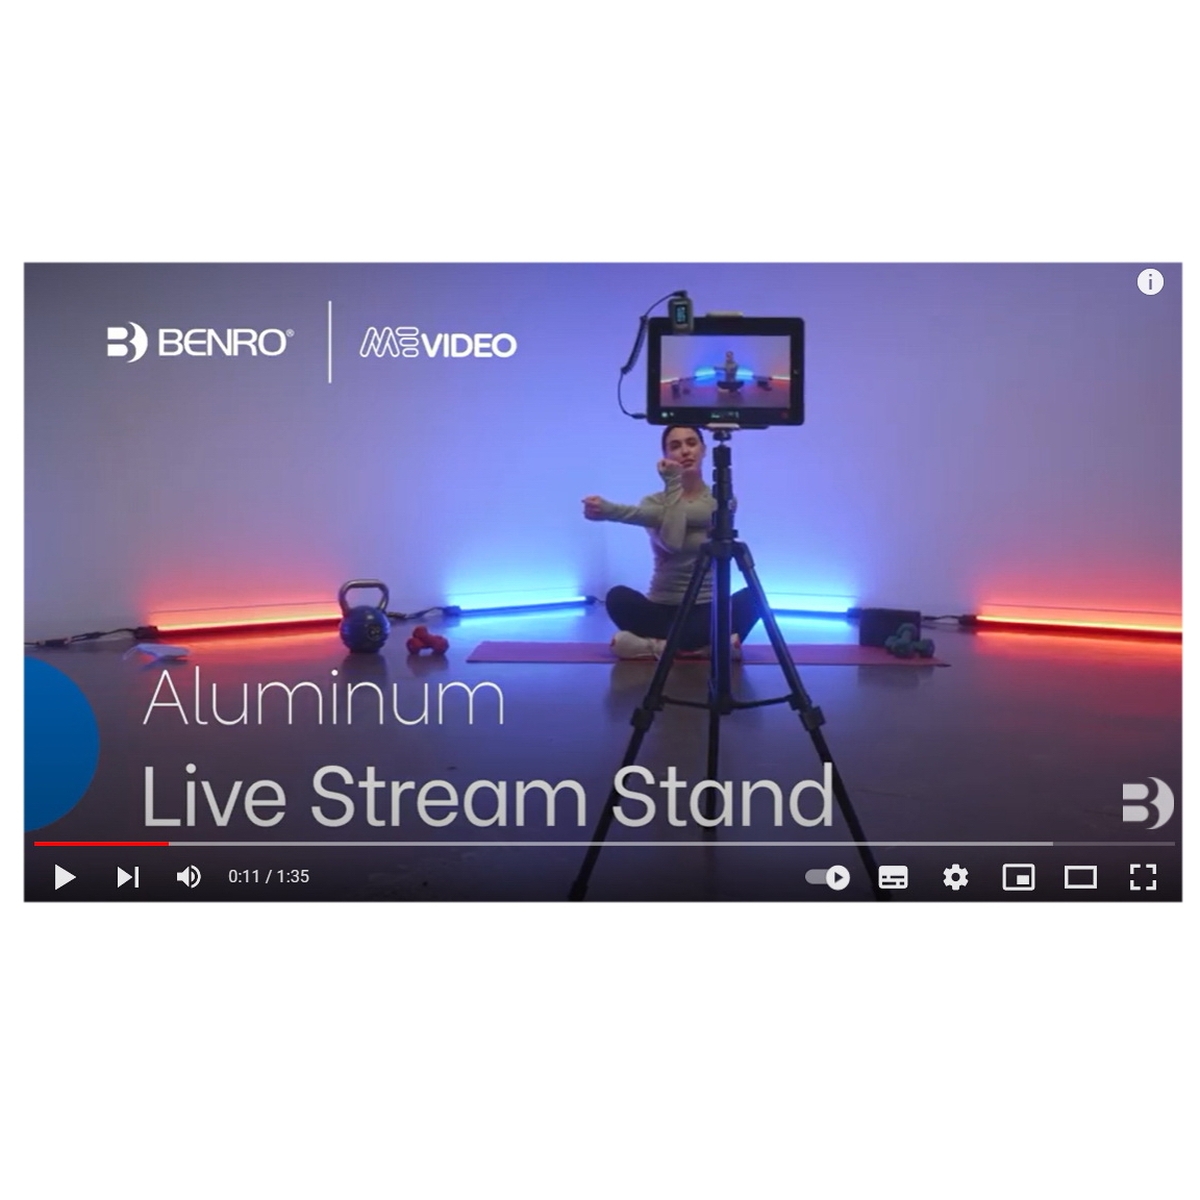 Benro MeVideo Alu Livestream Stativ